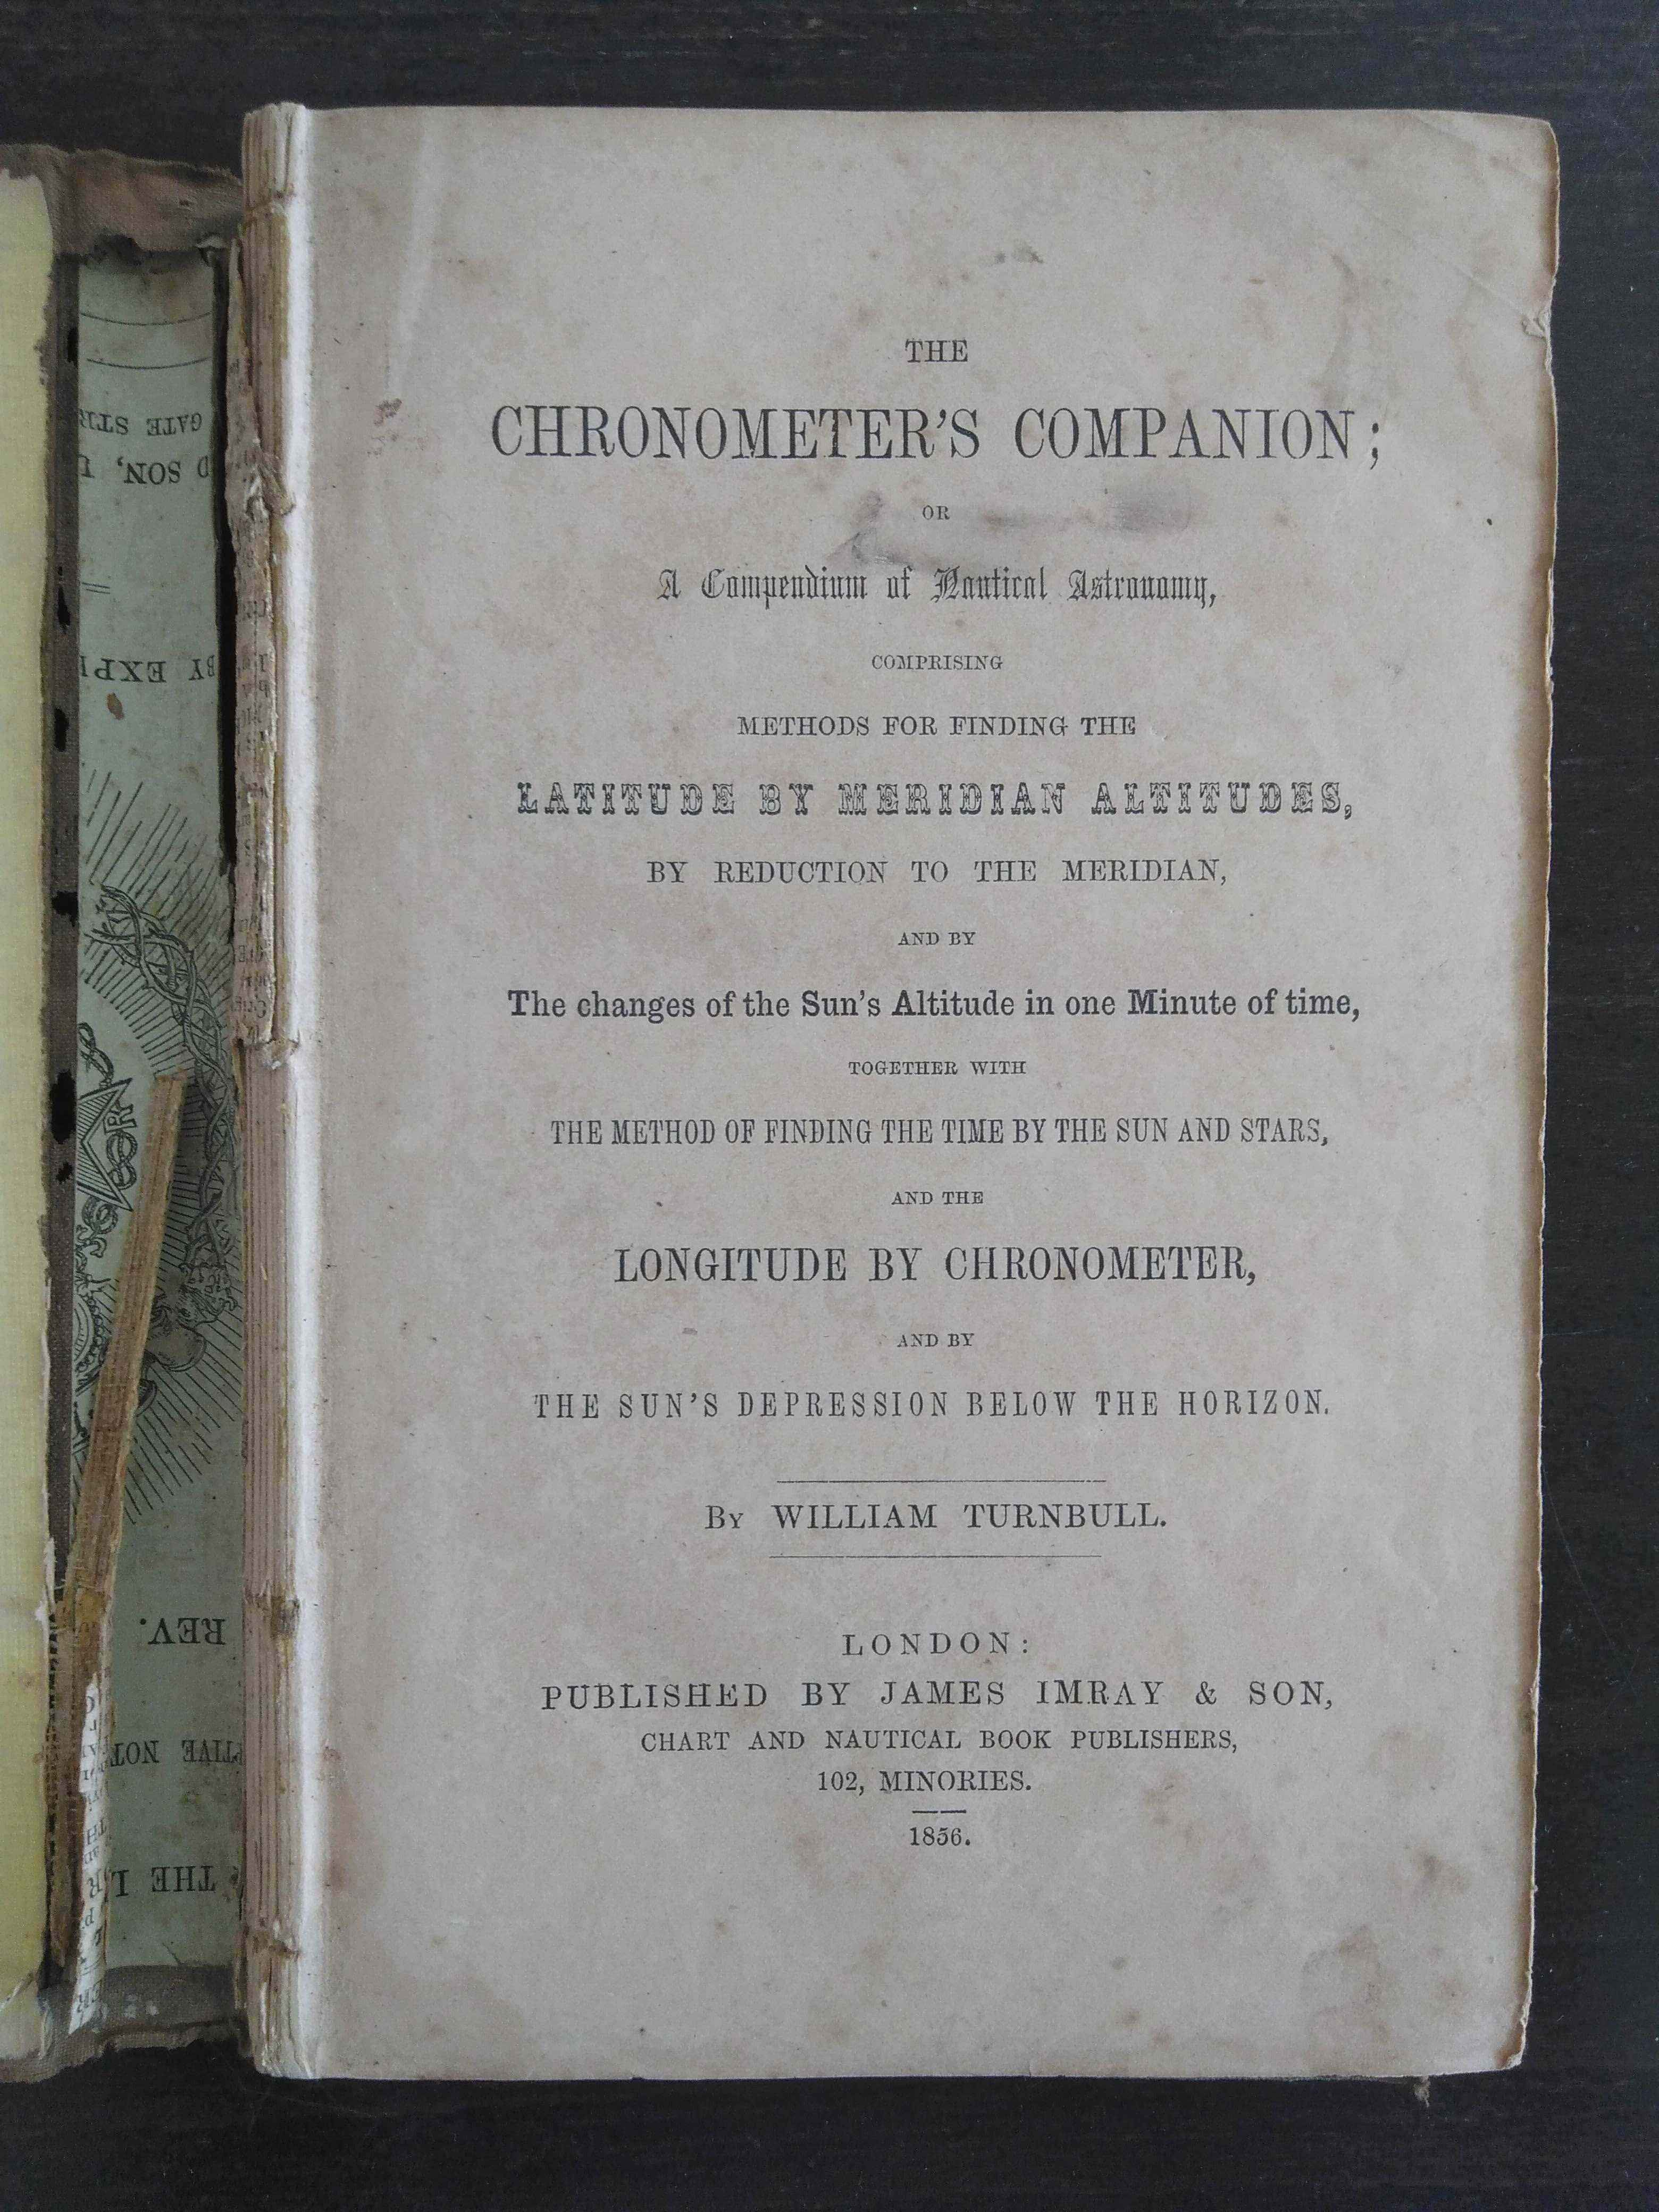 livro: William Turnbull “The chronometer’s companion (…)”